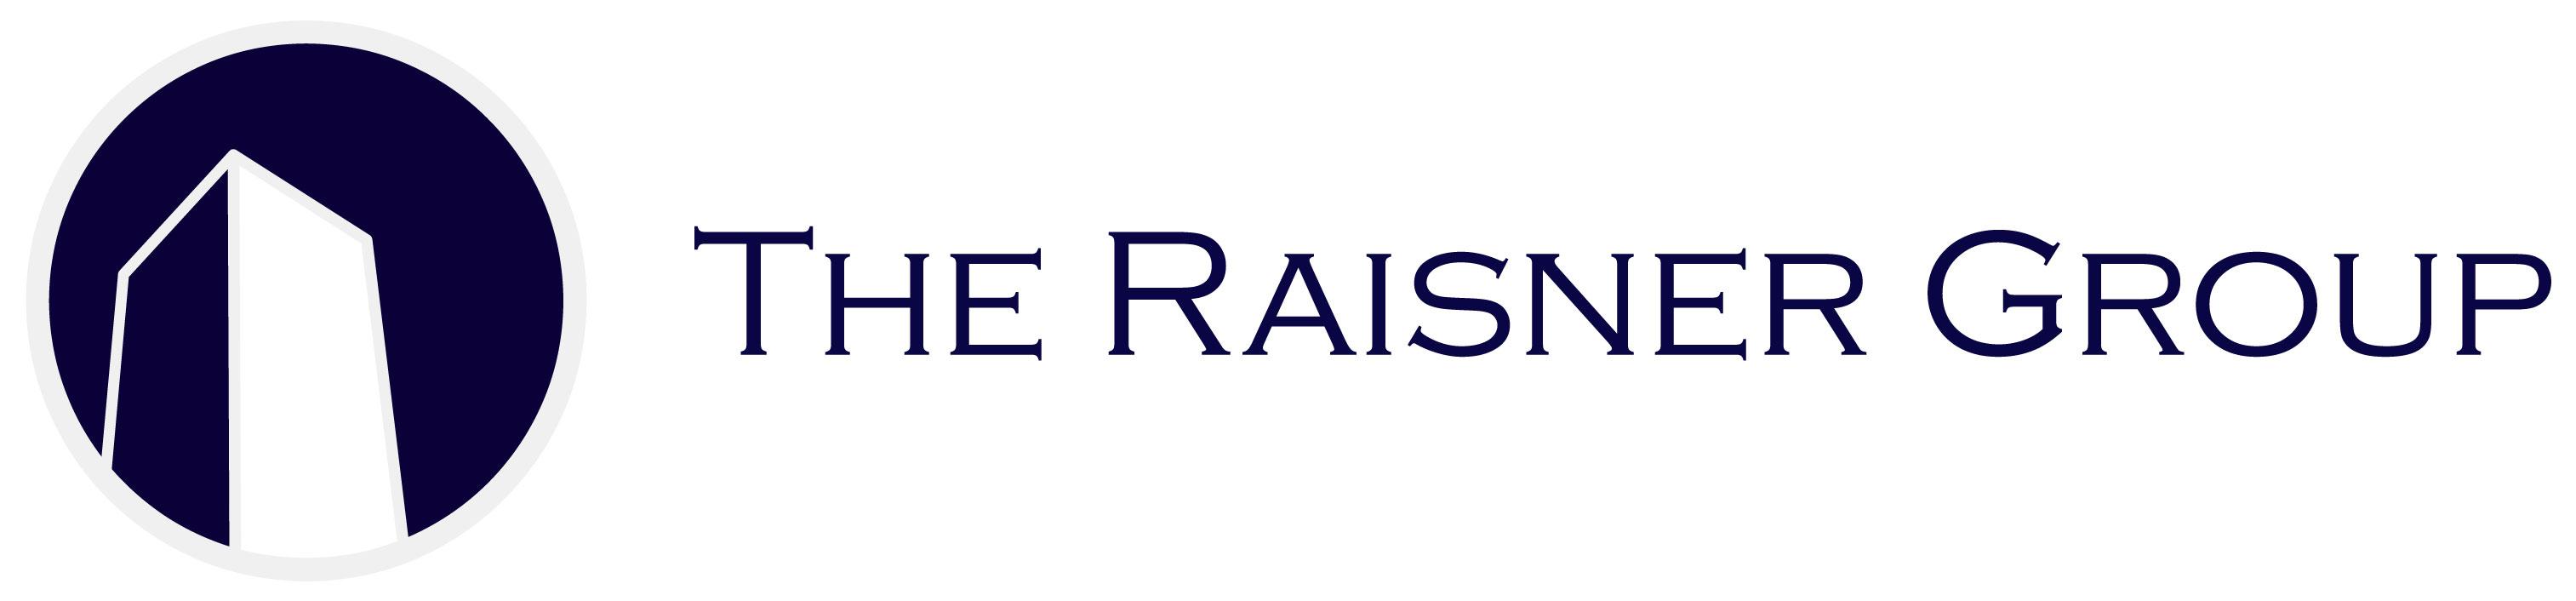 The Raisner Group